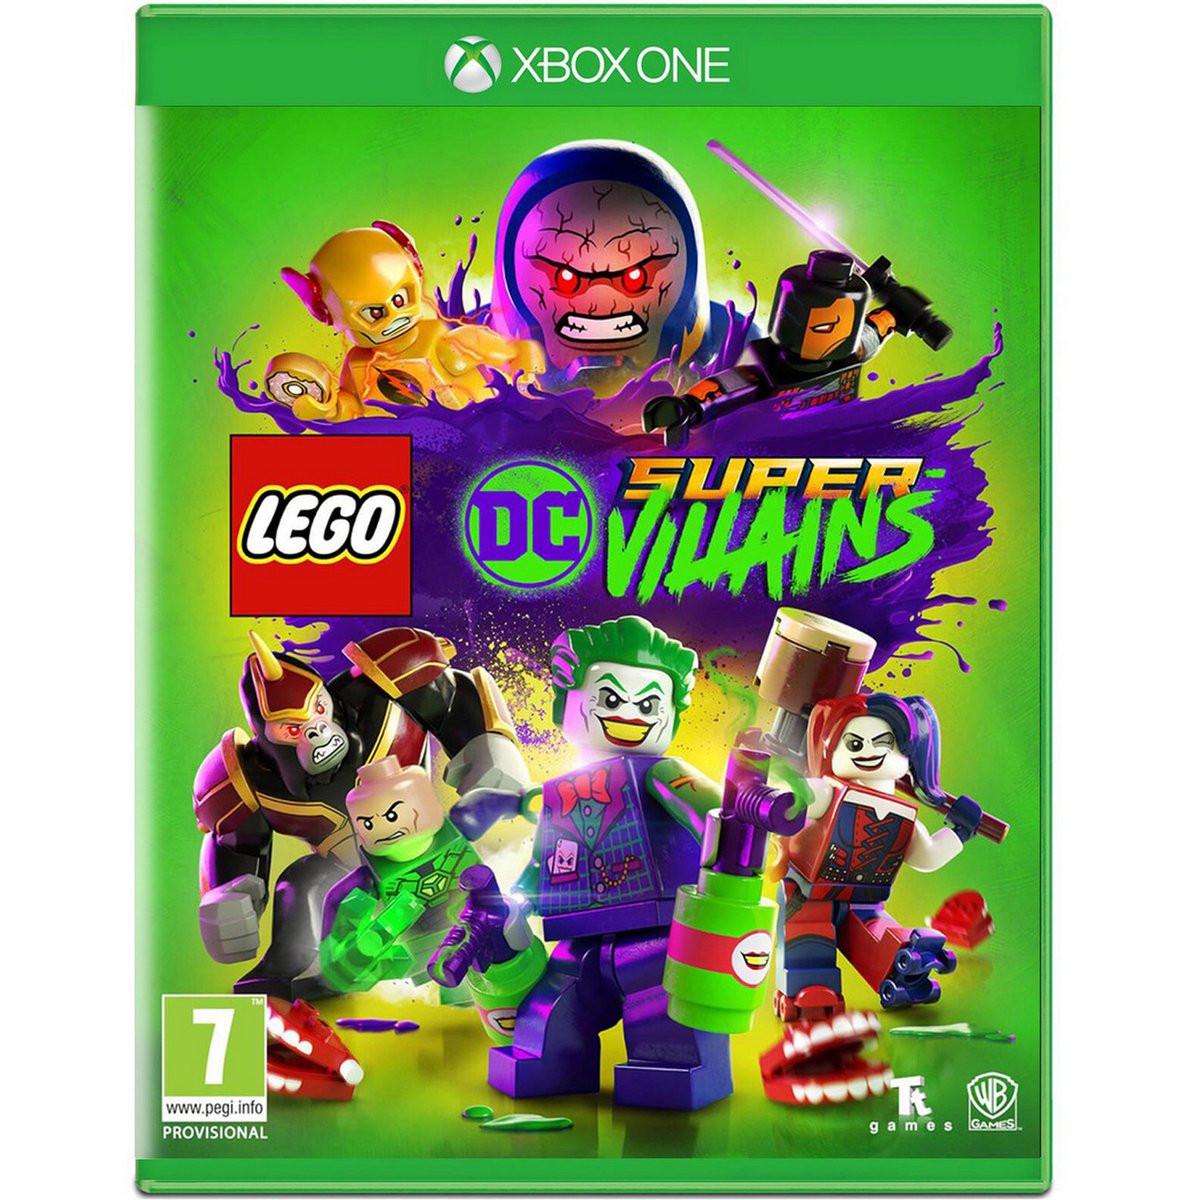 XBox One LEGO: DC Super-Villains